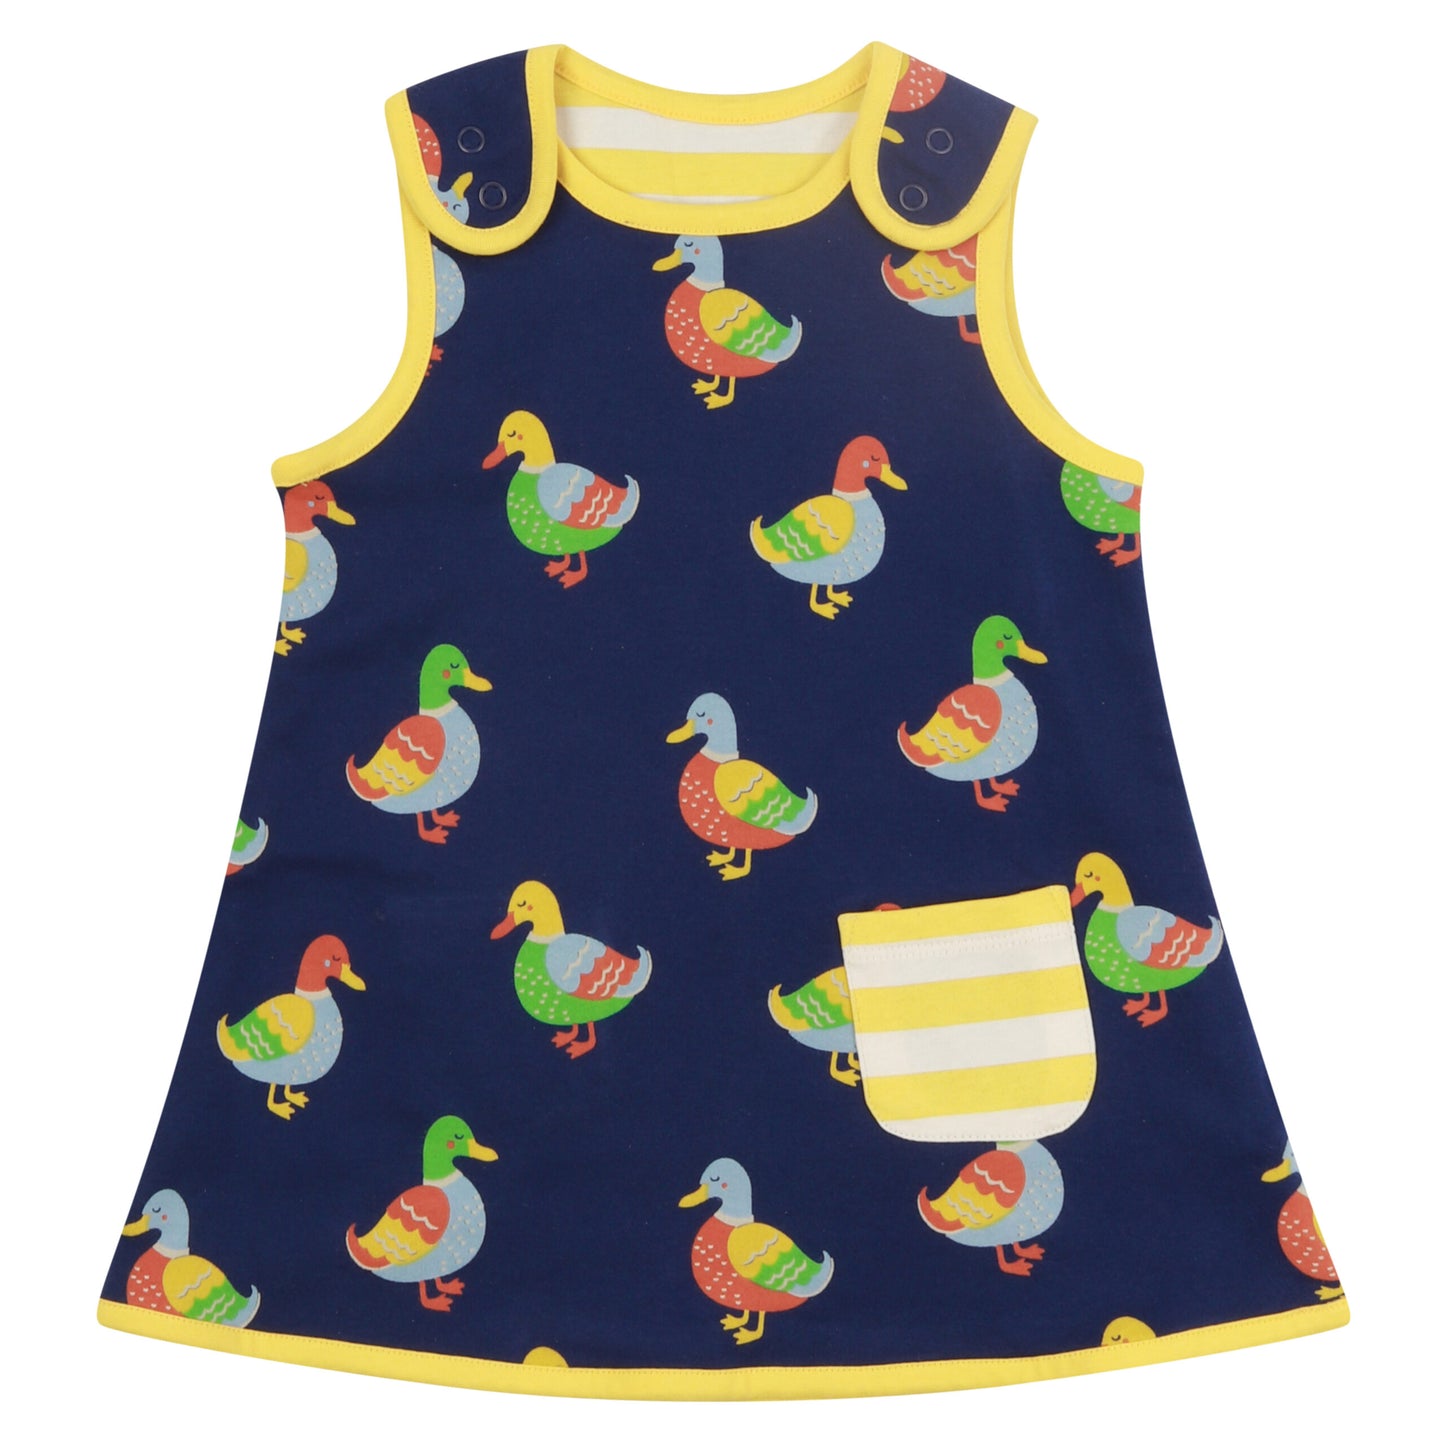 Duck reversible dress